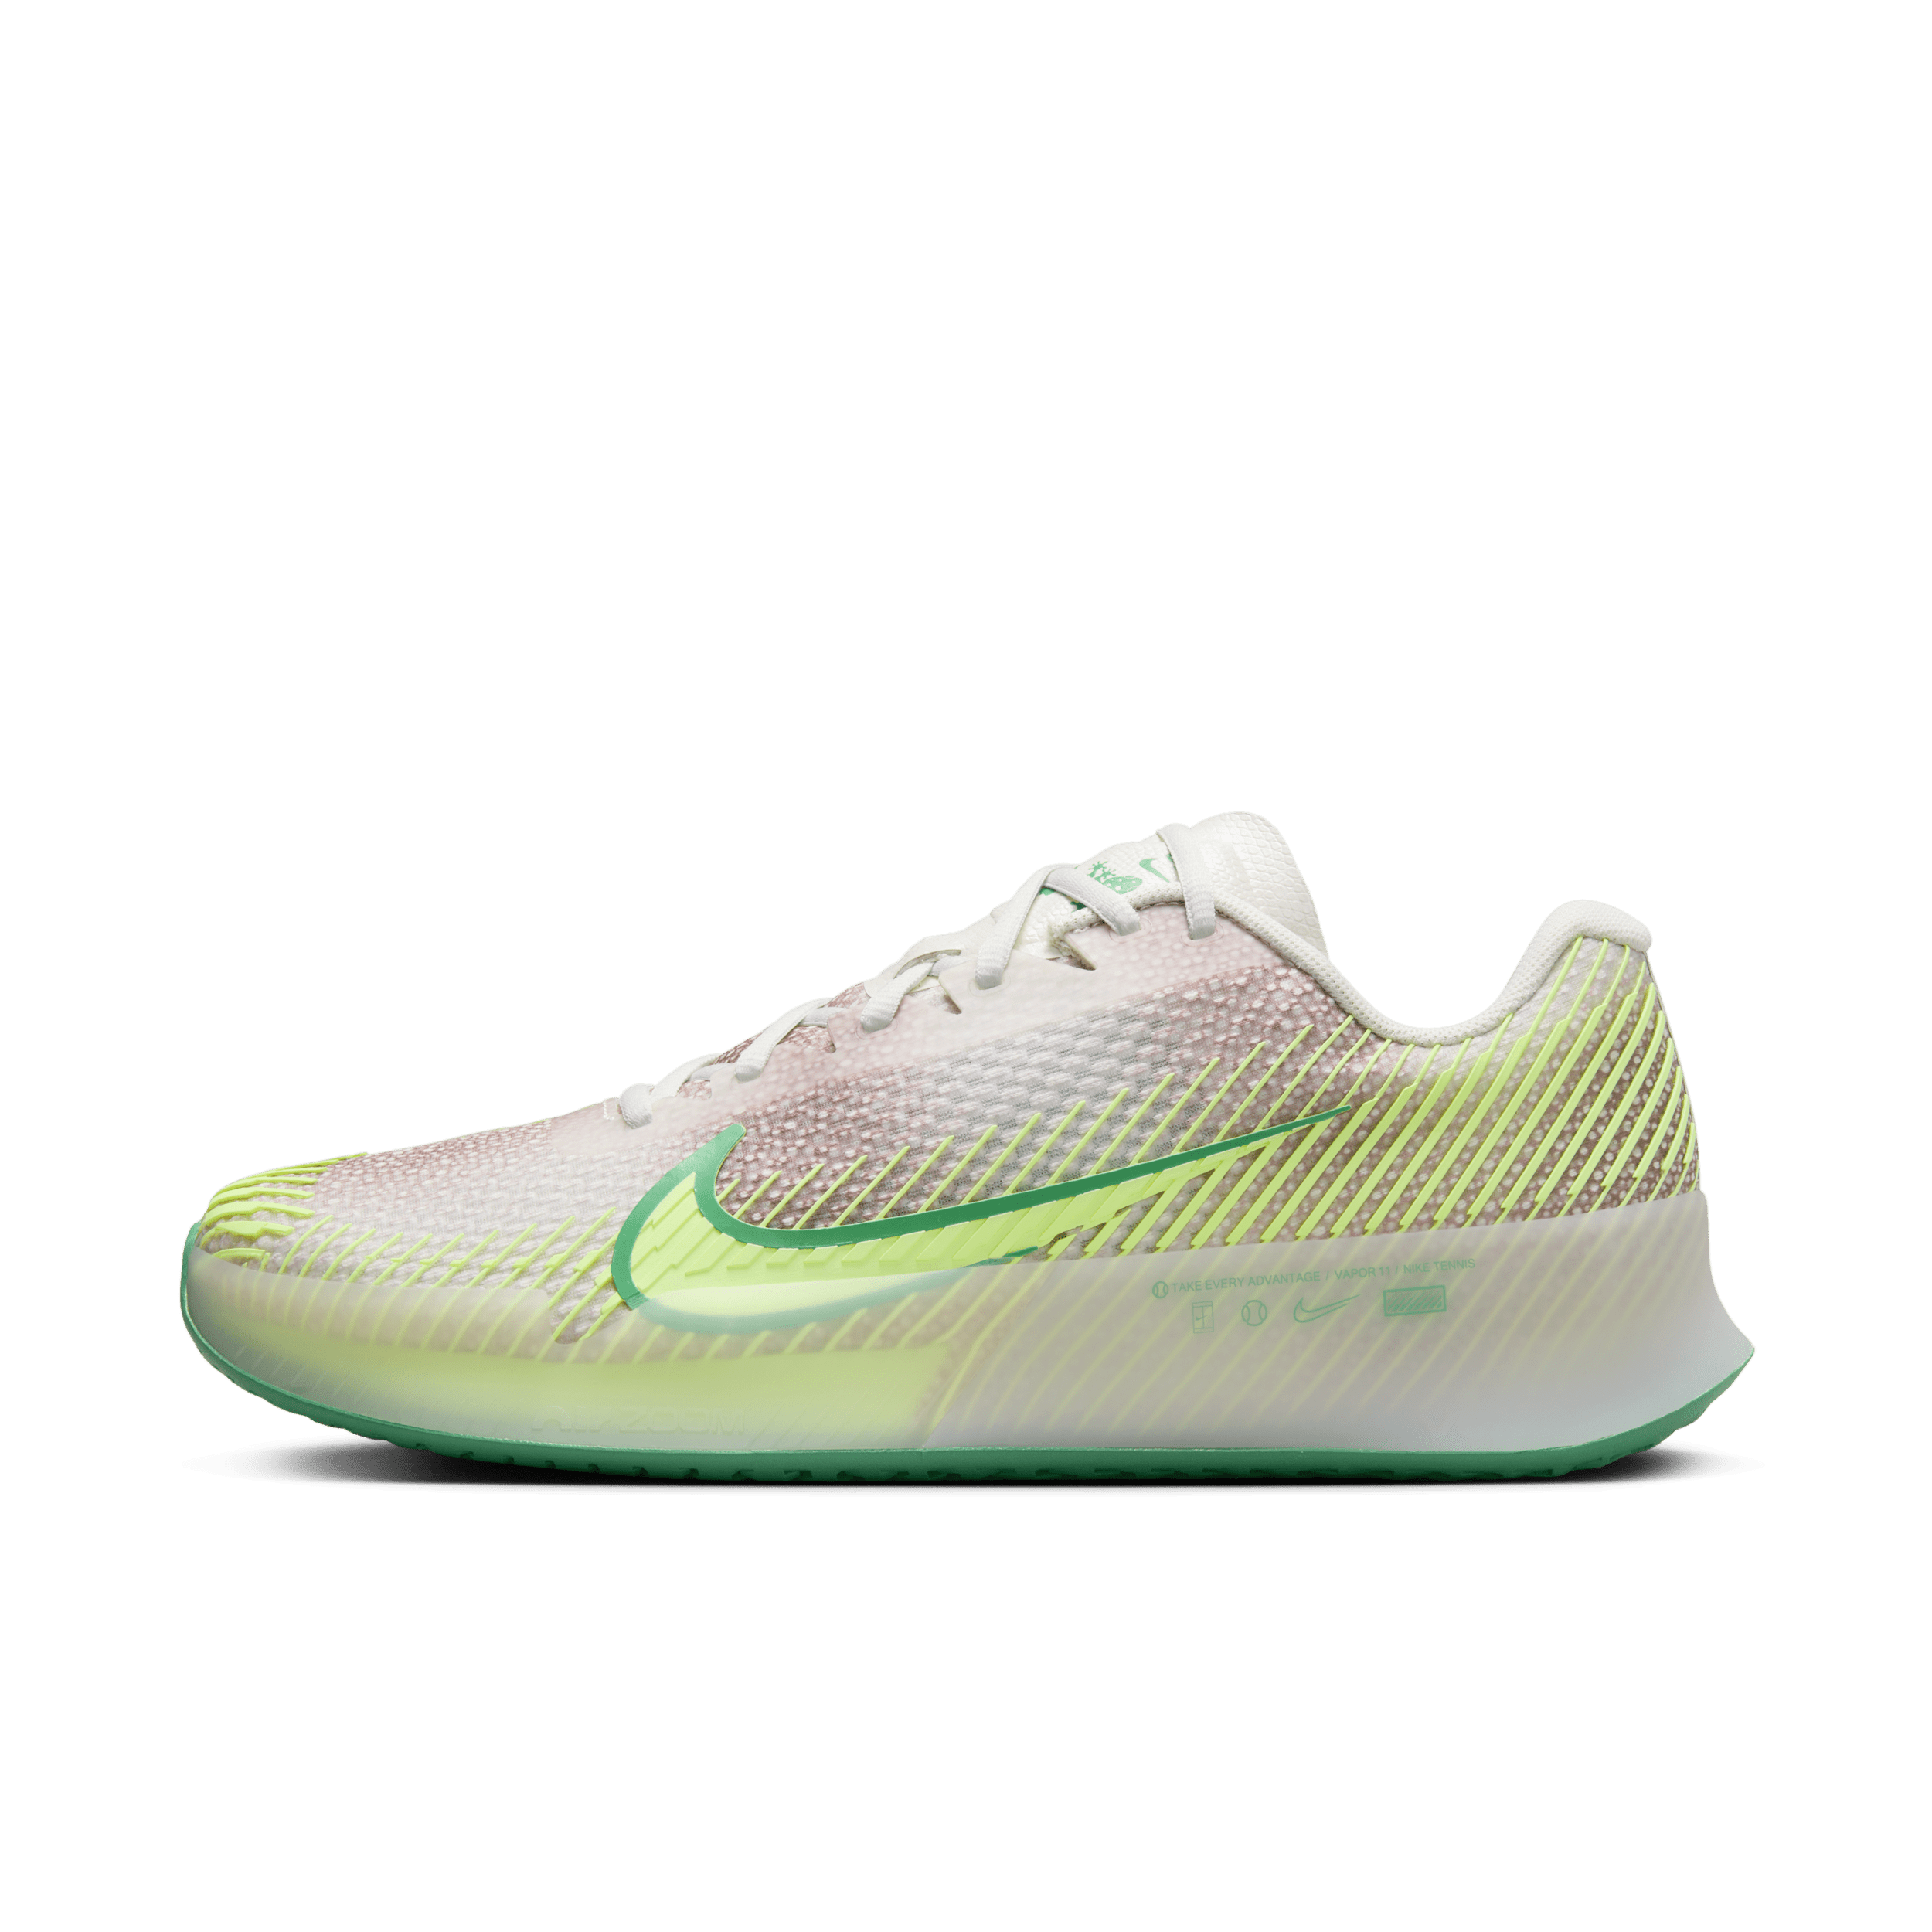 NikeCourt Air Zoom Vapor 11 Premium-tennissko til hardcourt til mænd - grå